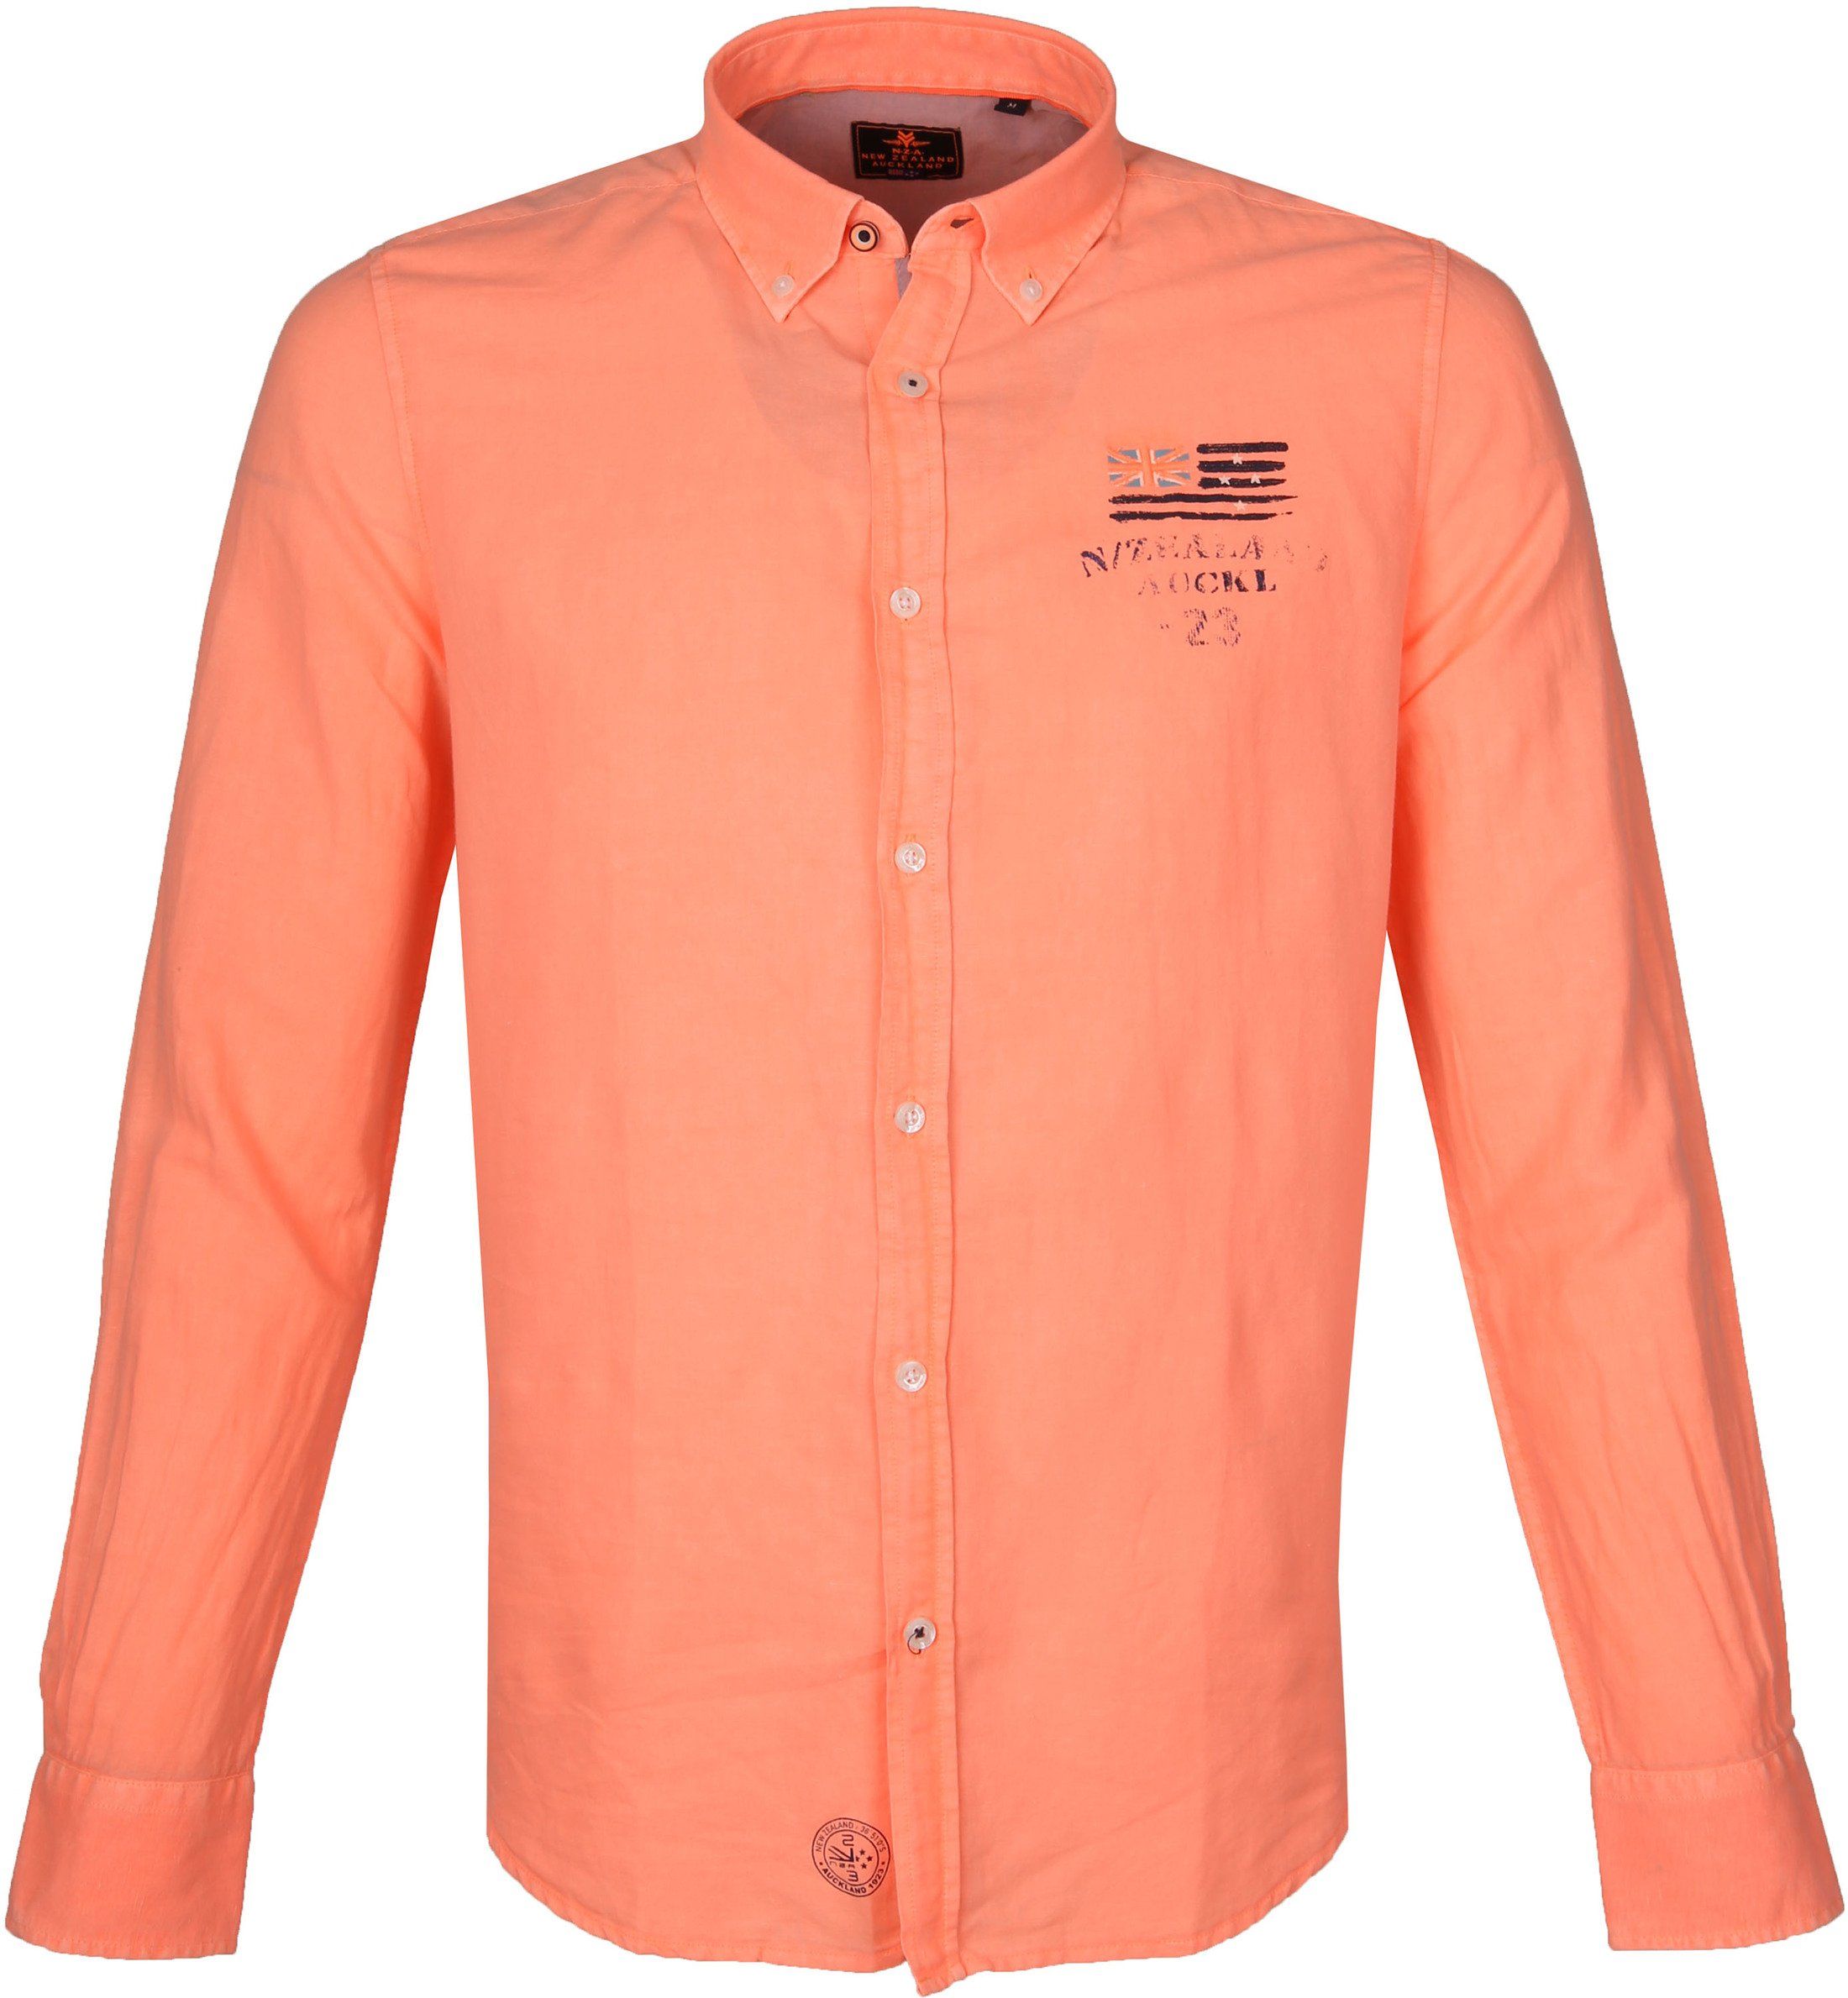 New Zealand Auckland - Nza shirt rakaia neon orange size l